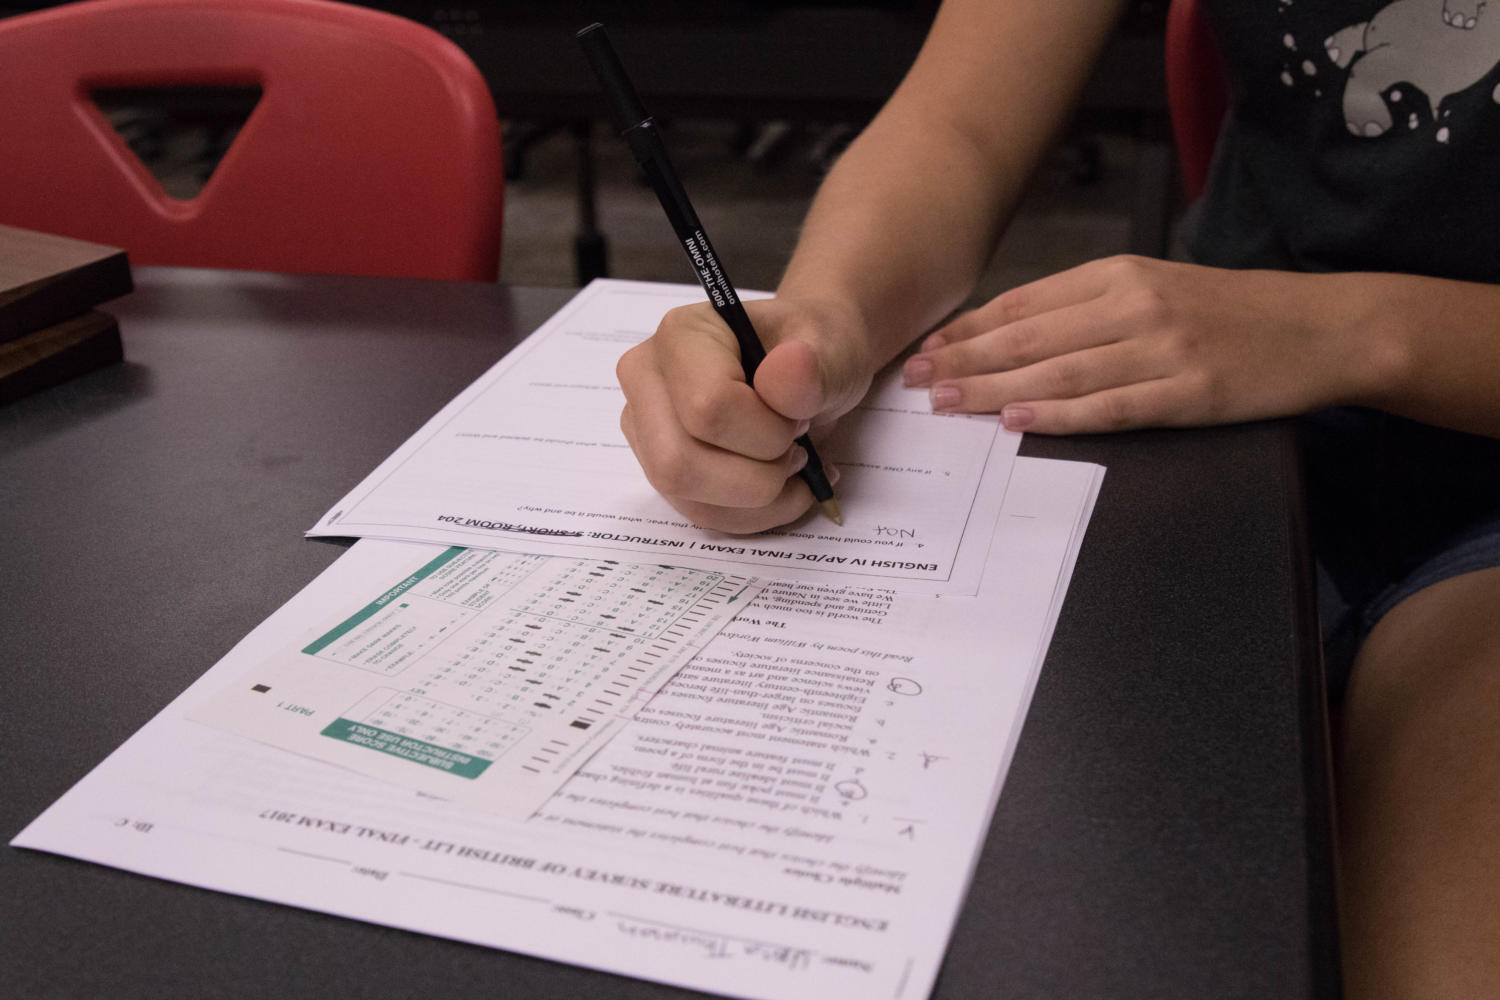 A student completes an end of year exam at Argyle High School in Argyle, Texas. (Gigi Robertson/ The Talon News)